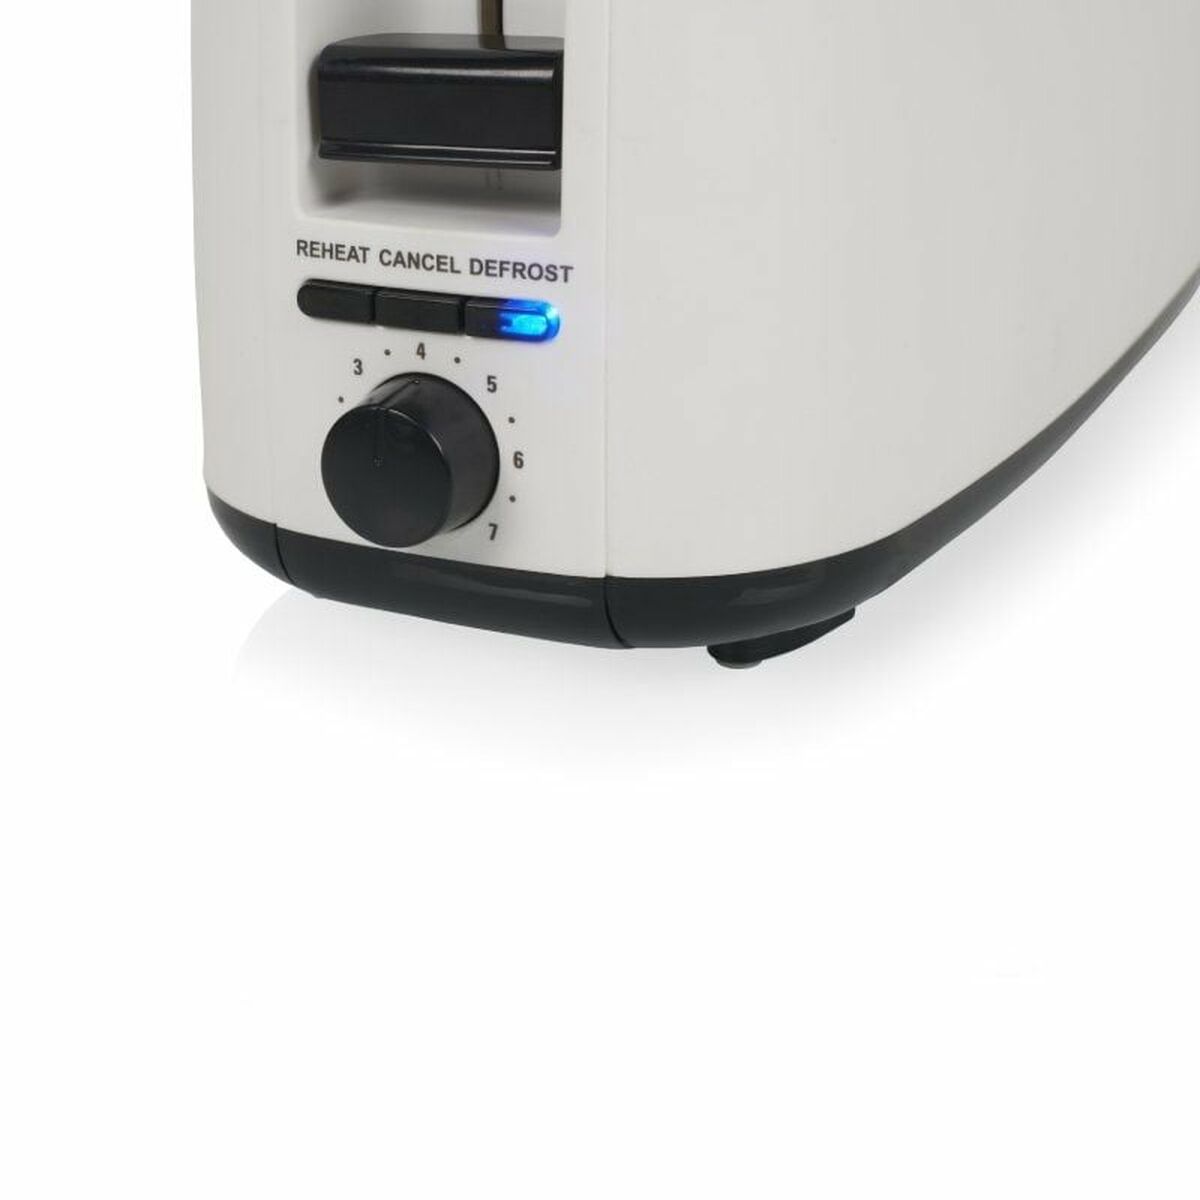 Toaster Tristar BR-1057 1400 W